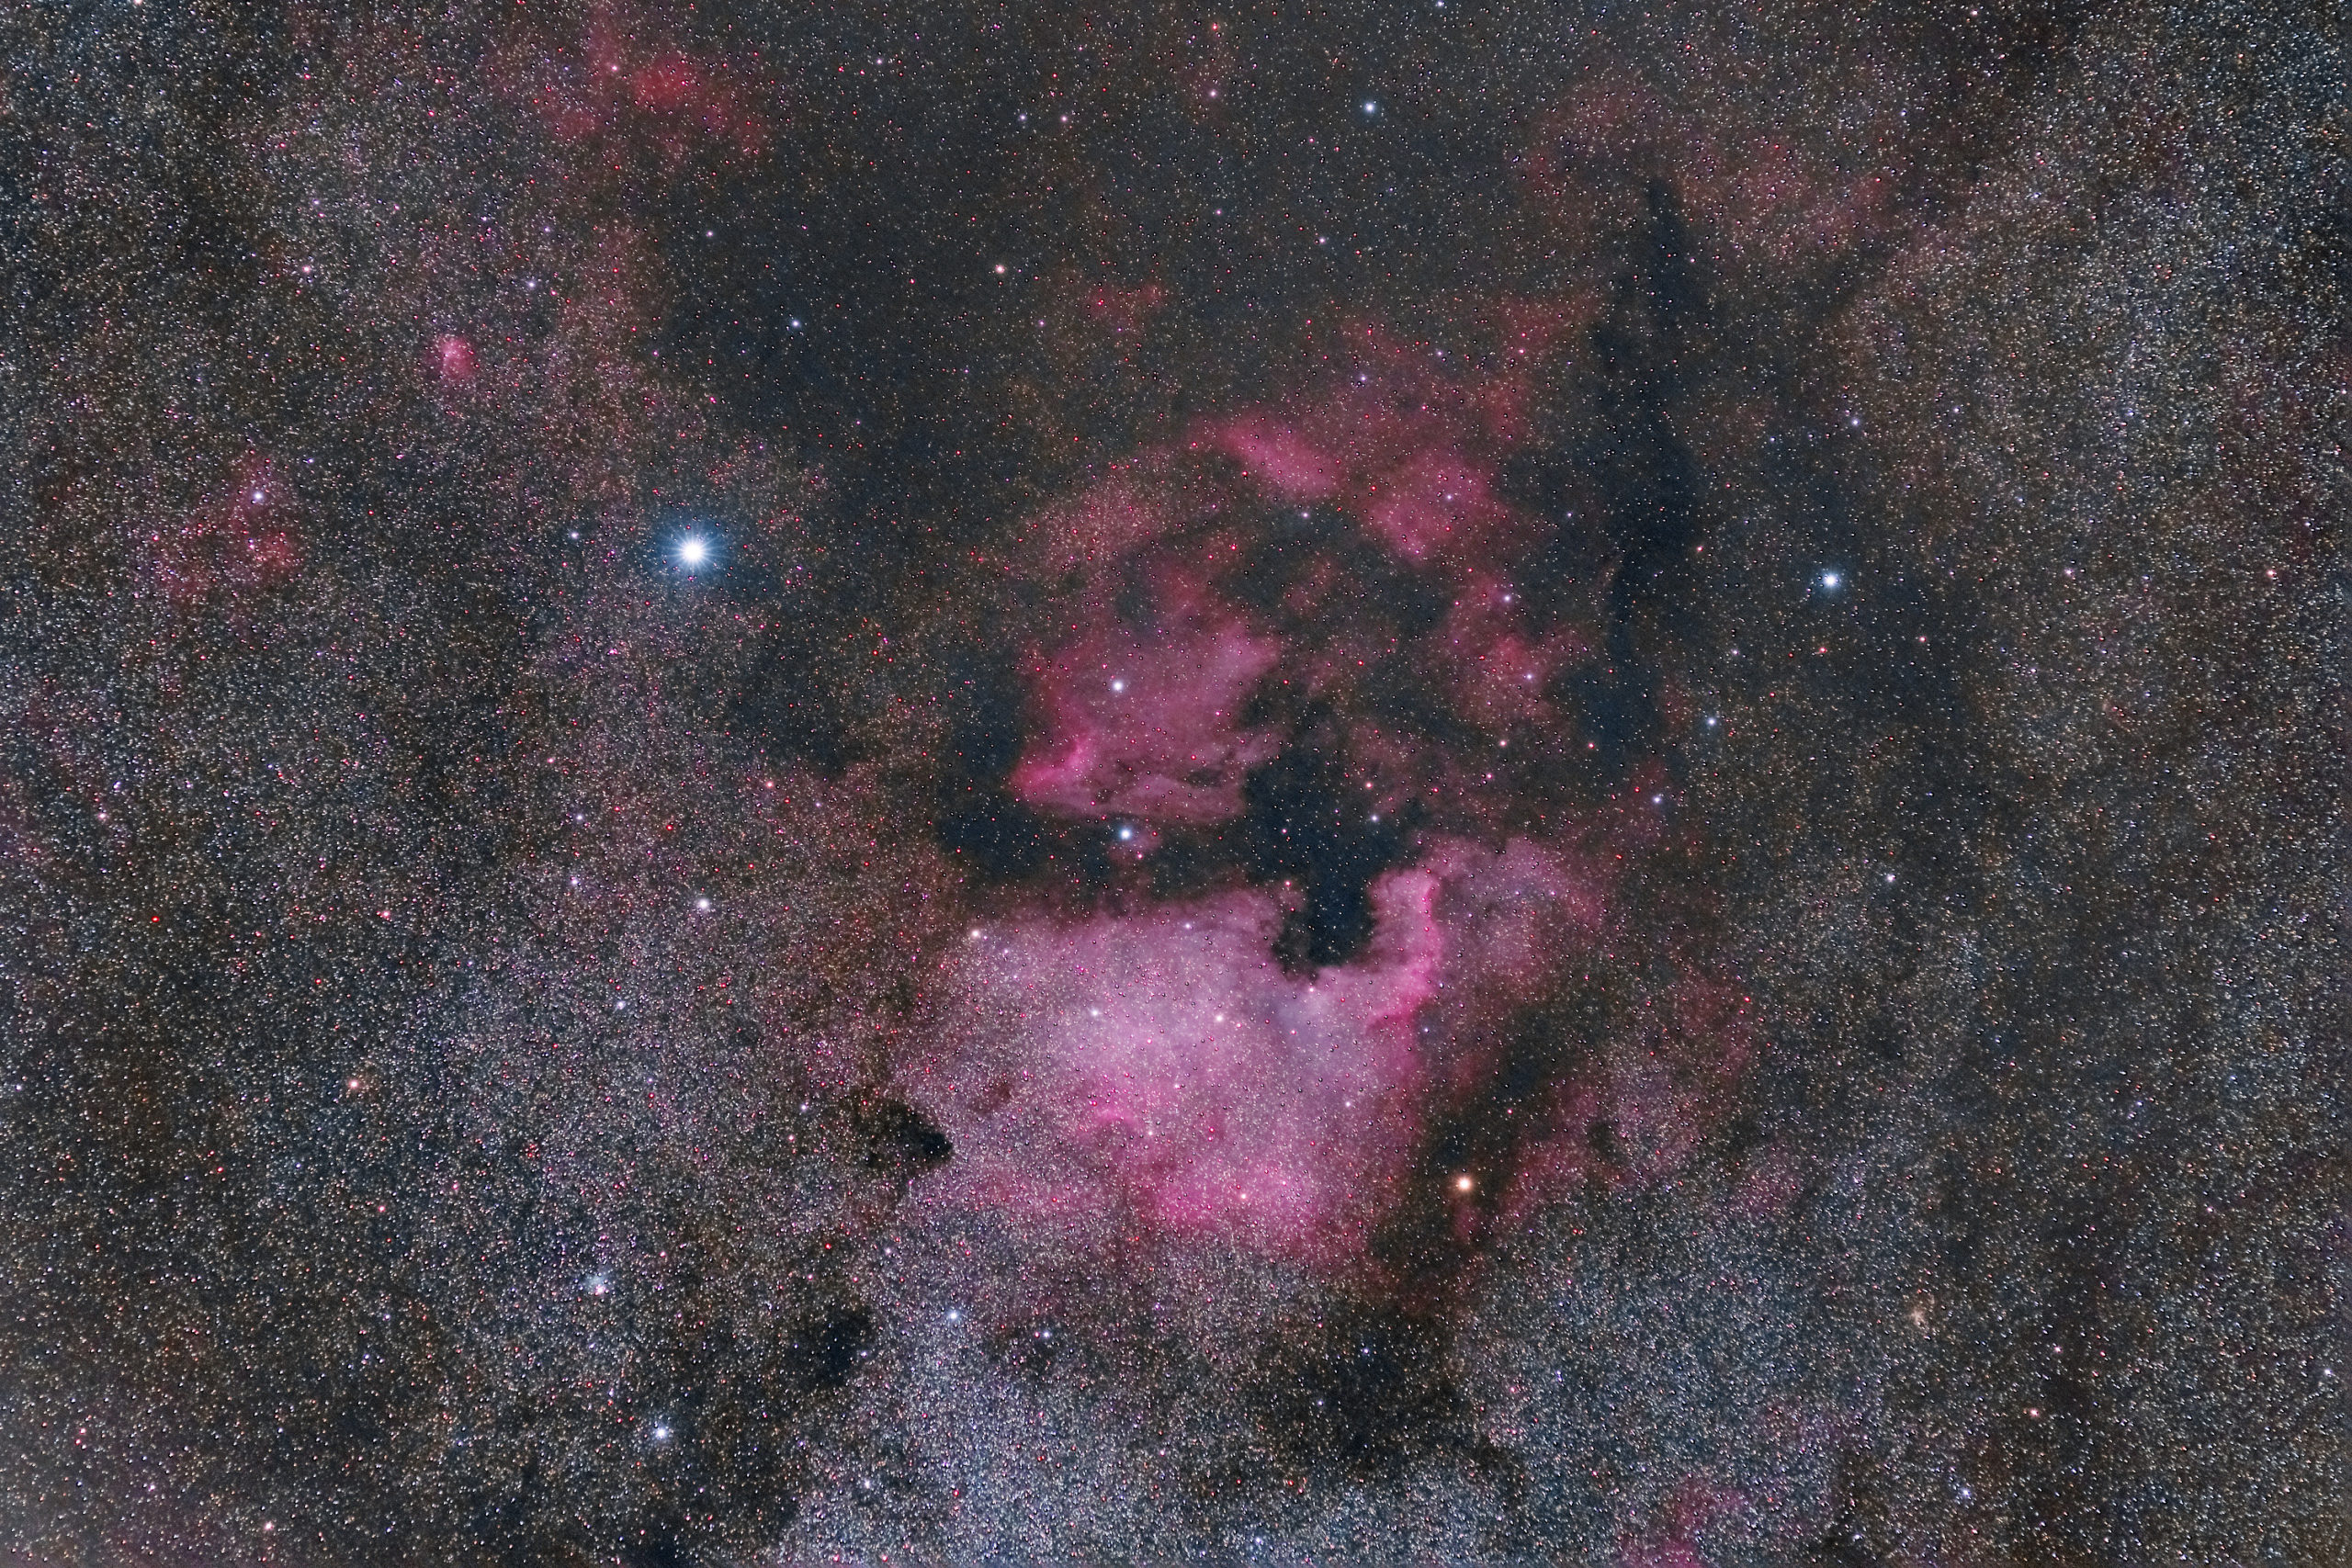 North America Nebula and Pelican Nebula photographed with Rokinon/Samyang 135mm f/2 lens.